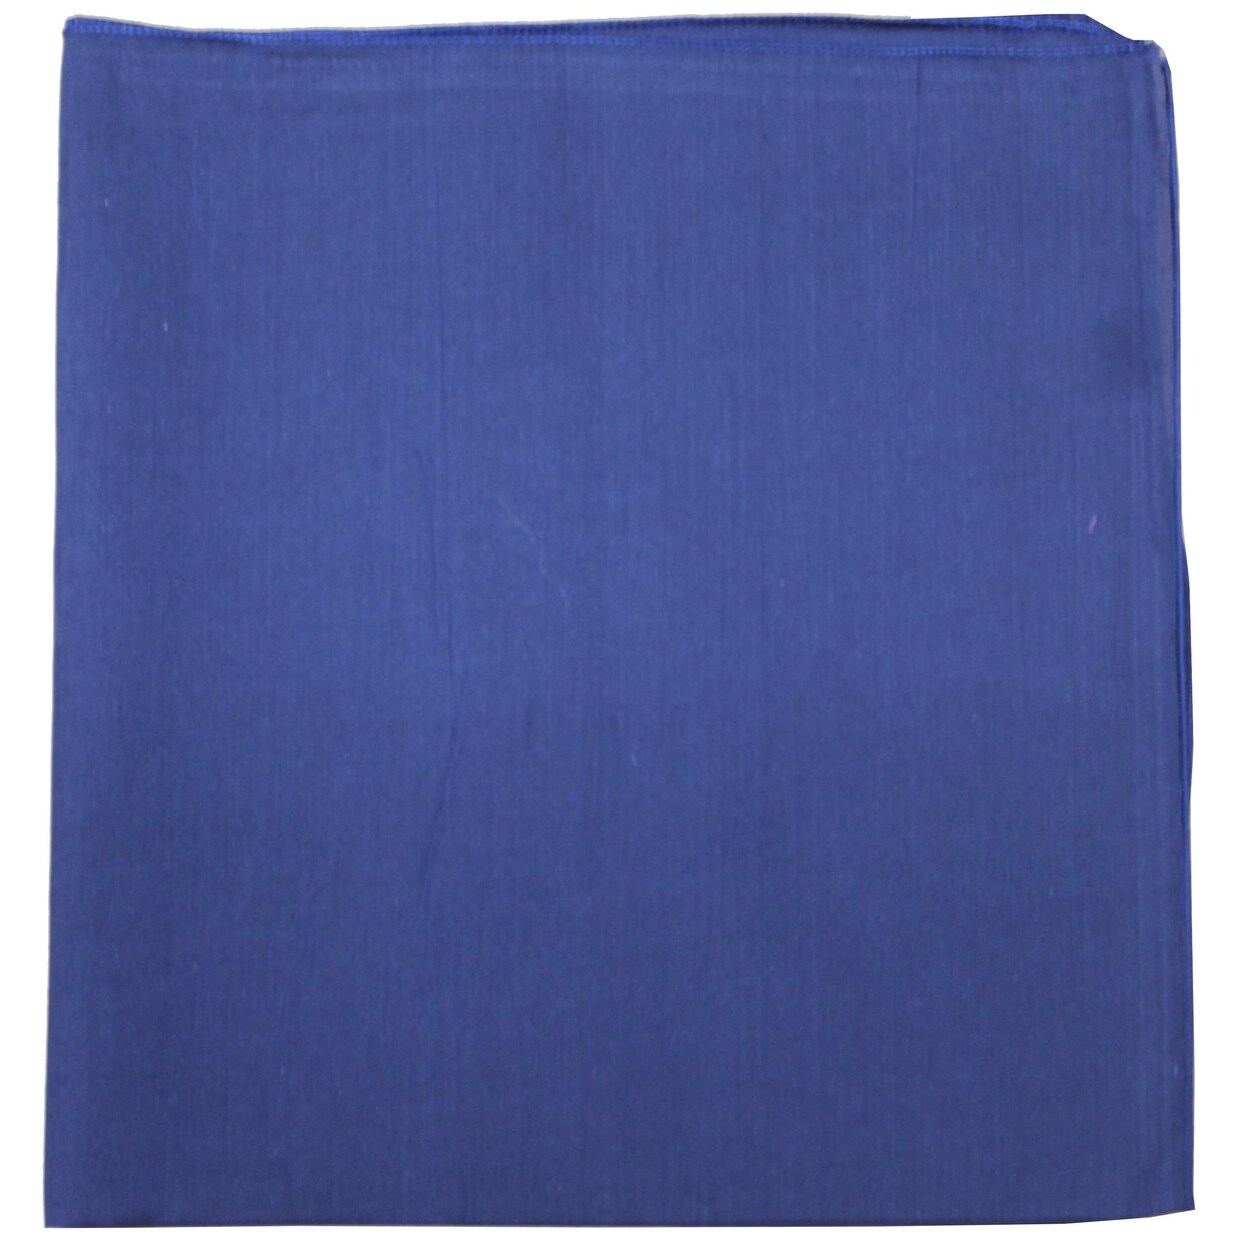 Unibasic   Solid colors Polyester Bandana head wrap handkerchief - 26 Pack